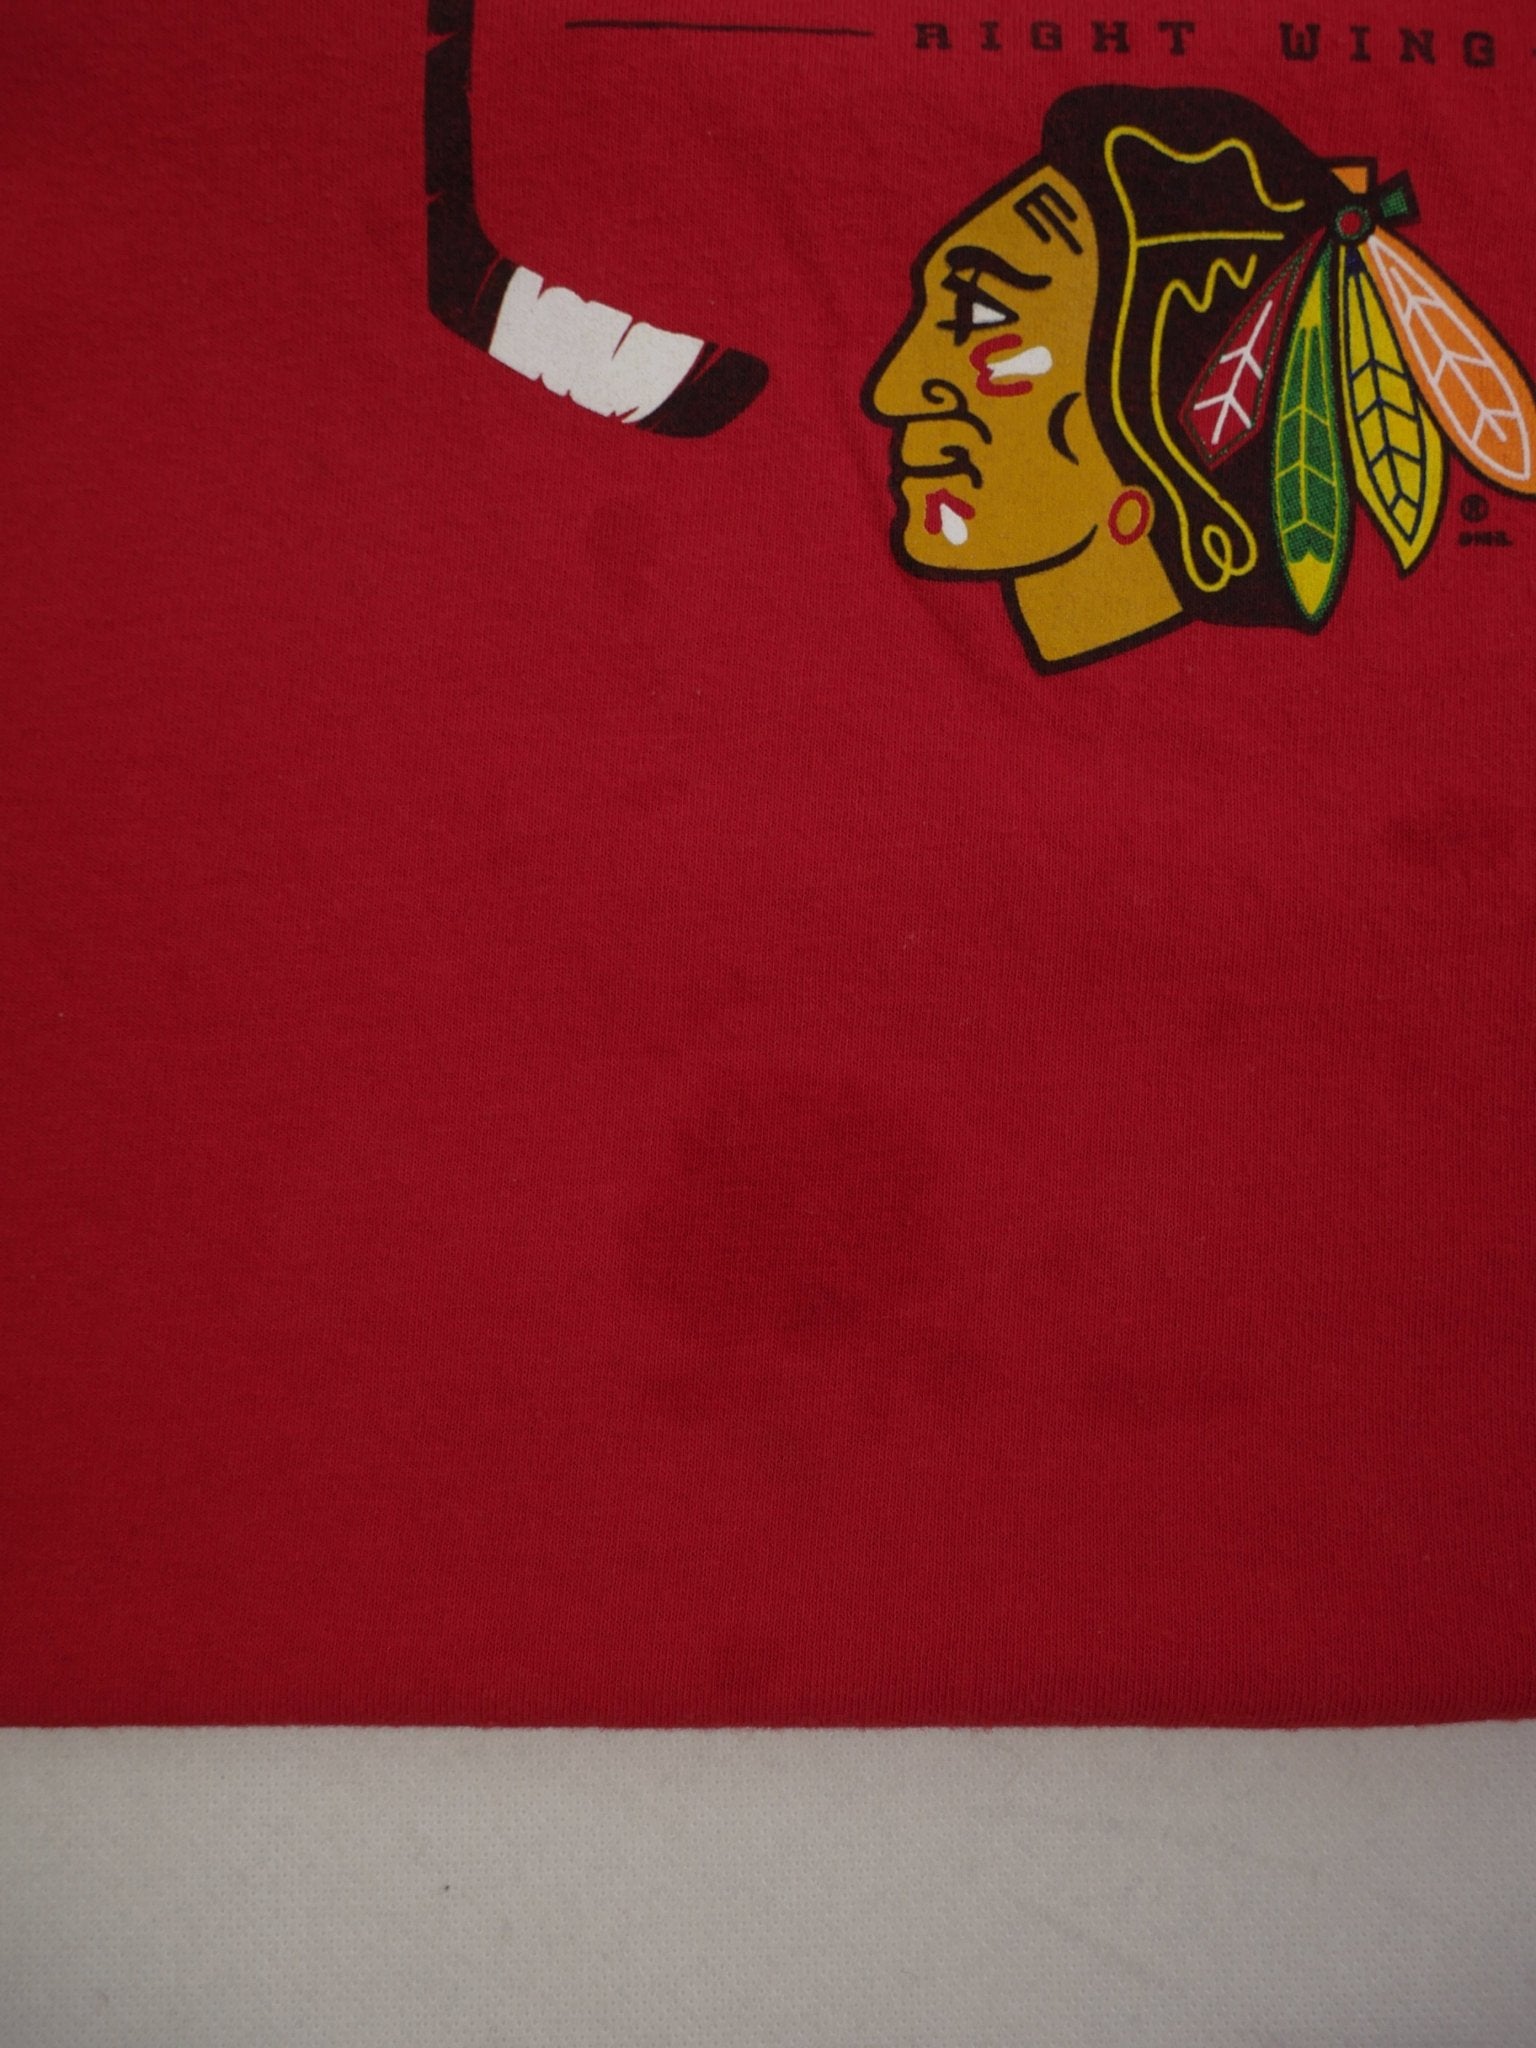 'Chicago Blackhawks' NHL printed Graphic red Shirt - Peeces